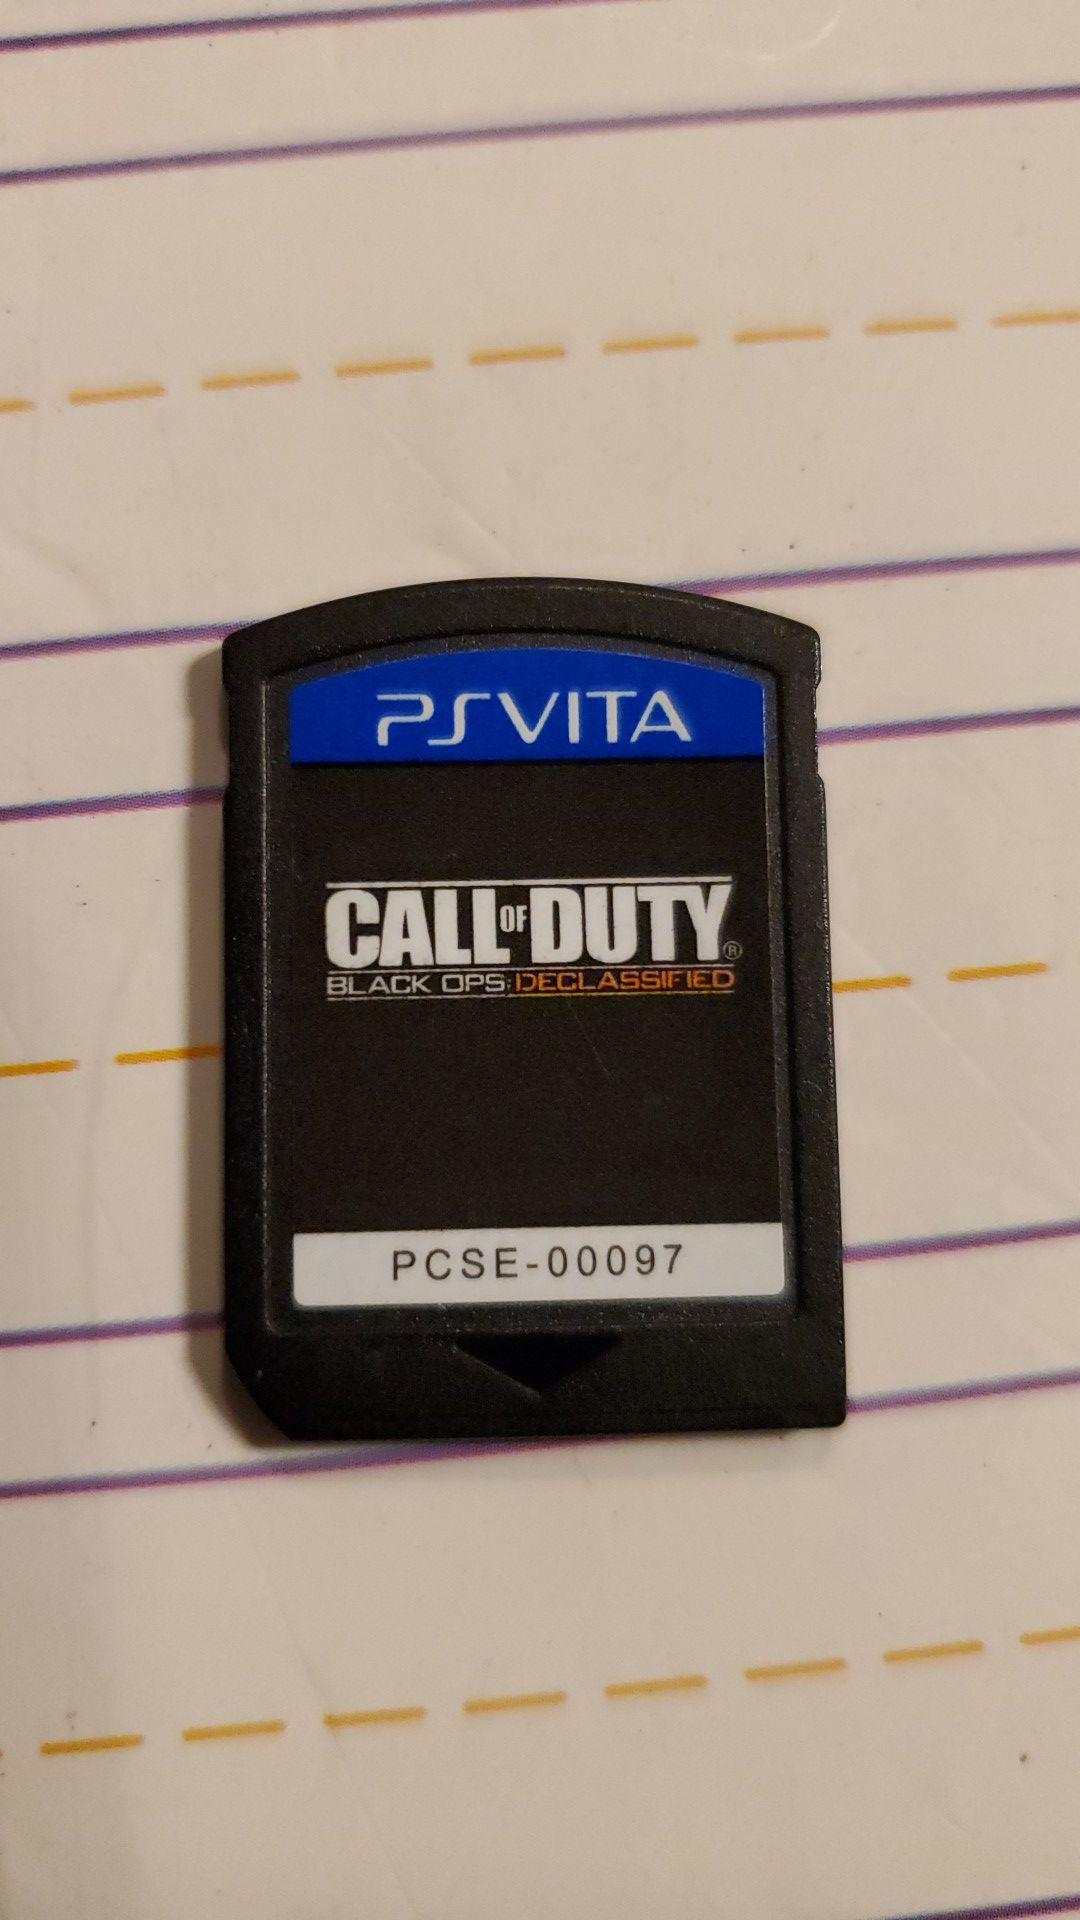 PsVITA Call of Duty (Black OPS Declassified)